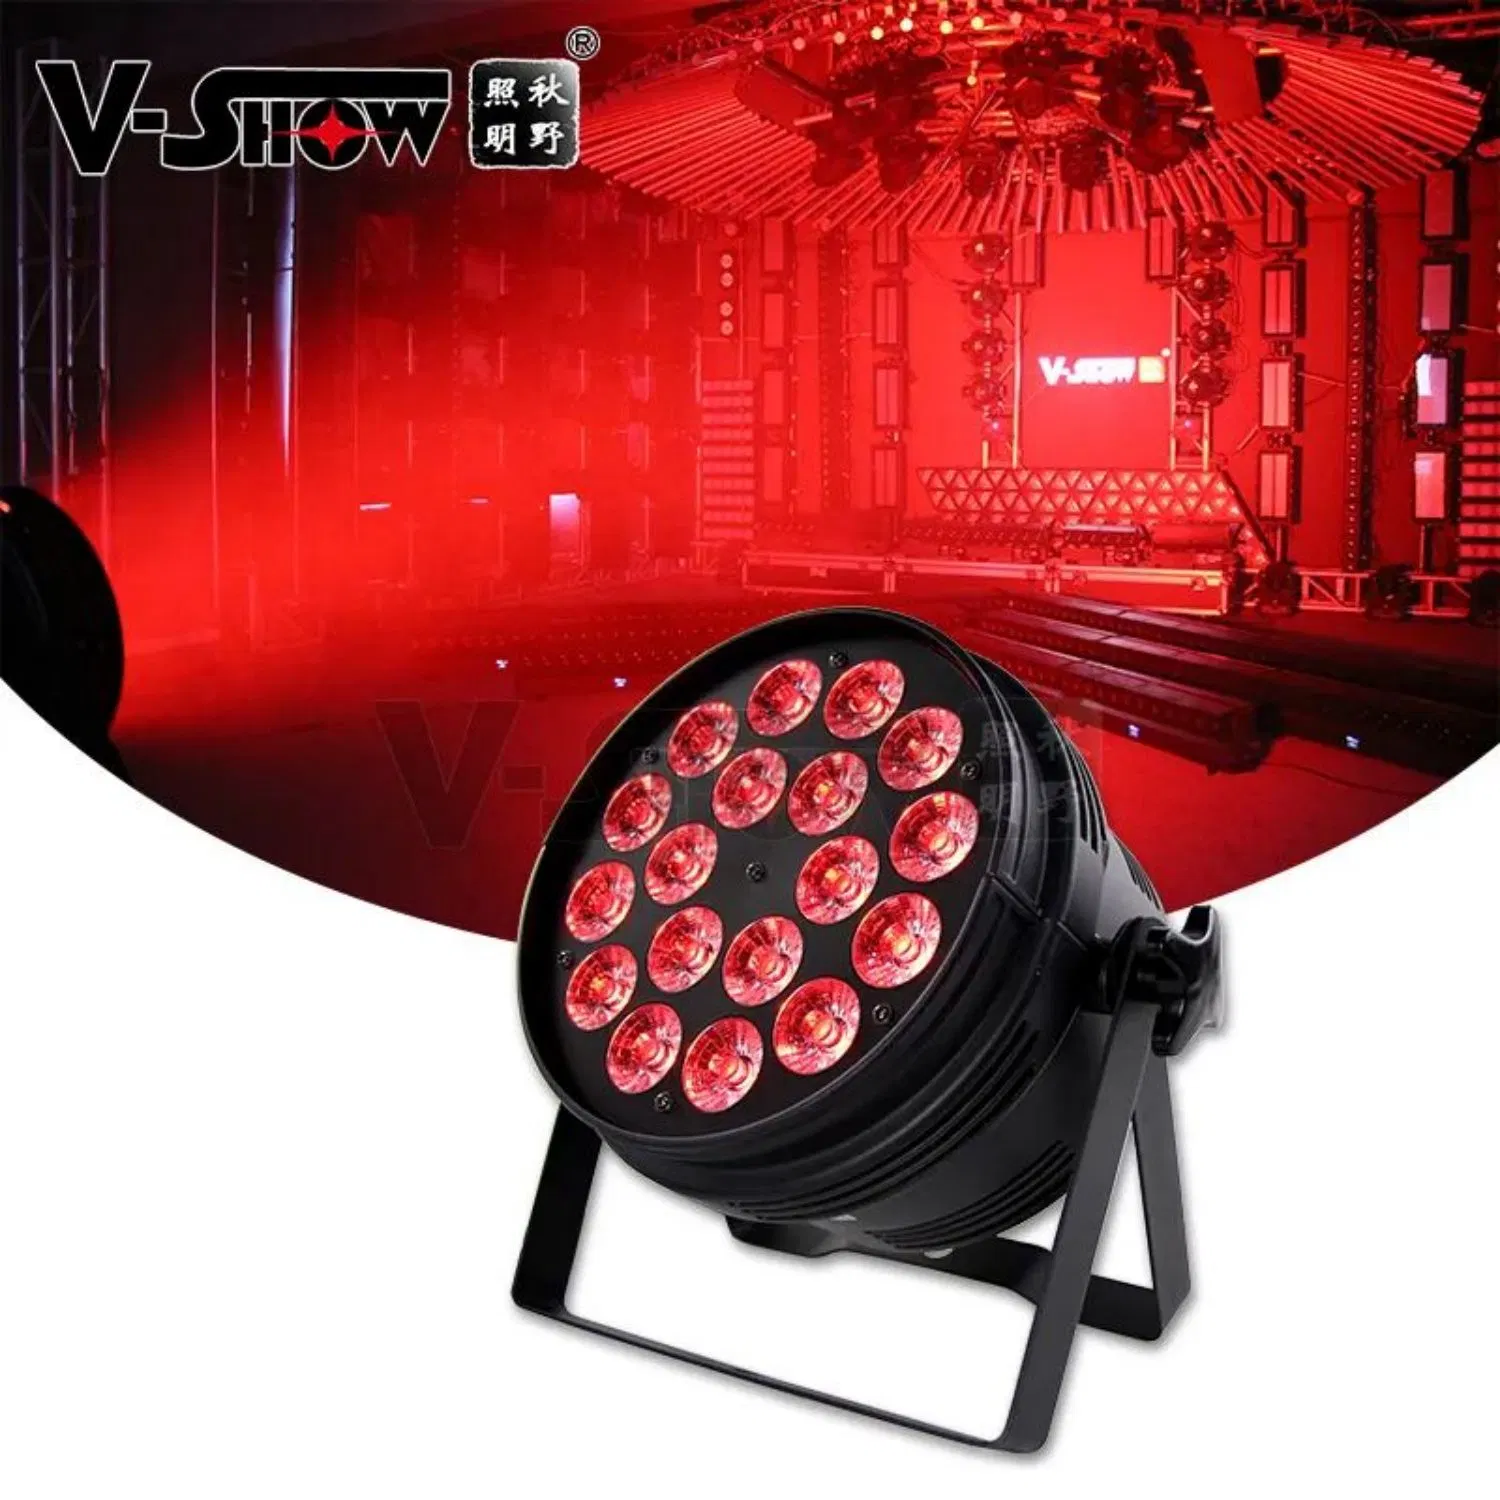 V-Show Individual LED 18*18 واط RGBWA+UV 6in1 بوصة LED داخلي par CAN خفيف